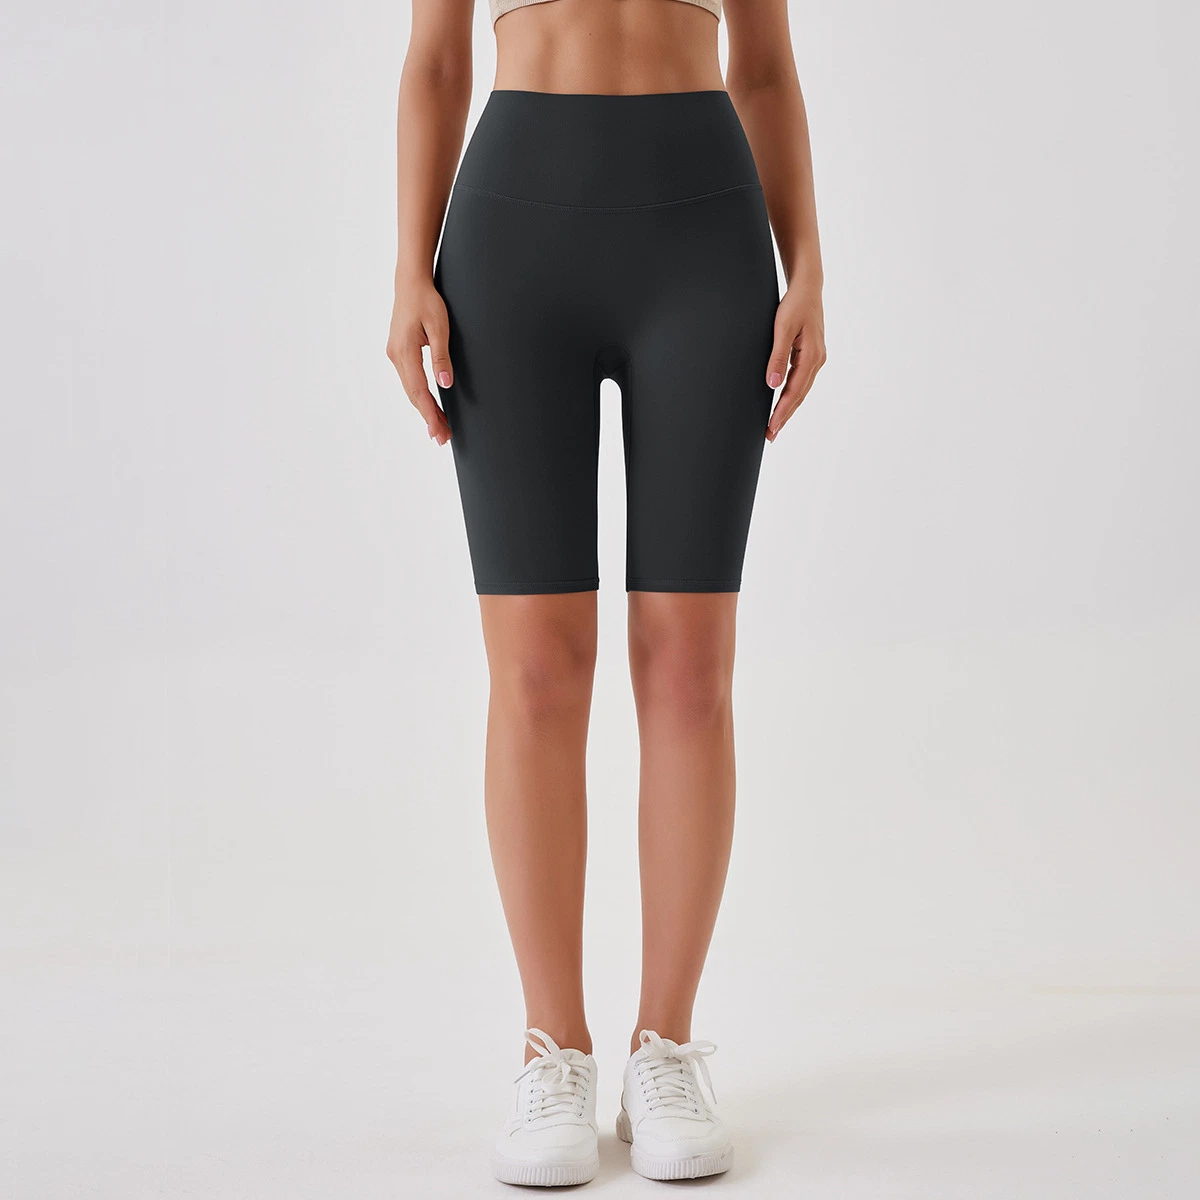 Guter Verkauf Custom Breathable Soft Solid Nylon Sport Fitness Hoch Taille Yoga Shorts Workout Shorts Damen Biker Shorts Leggings